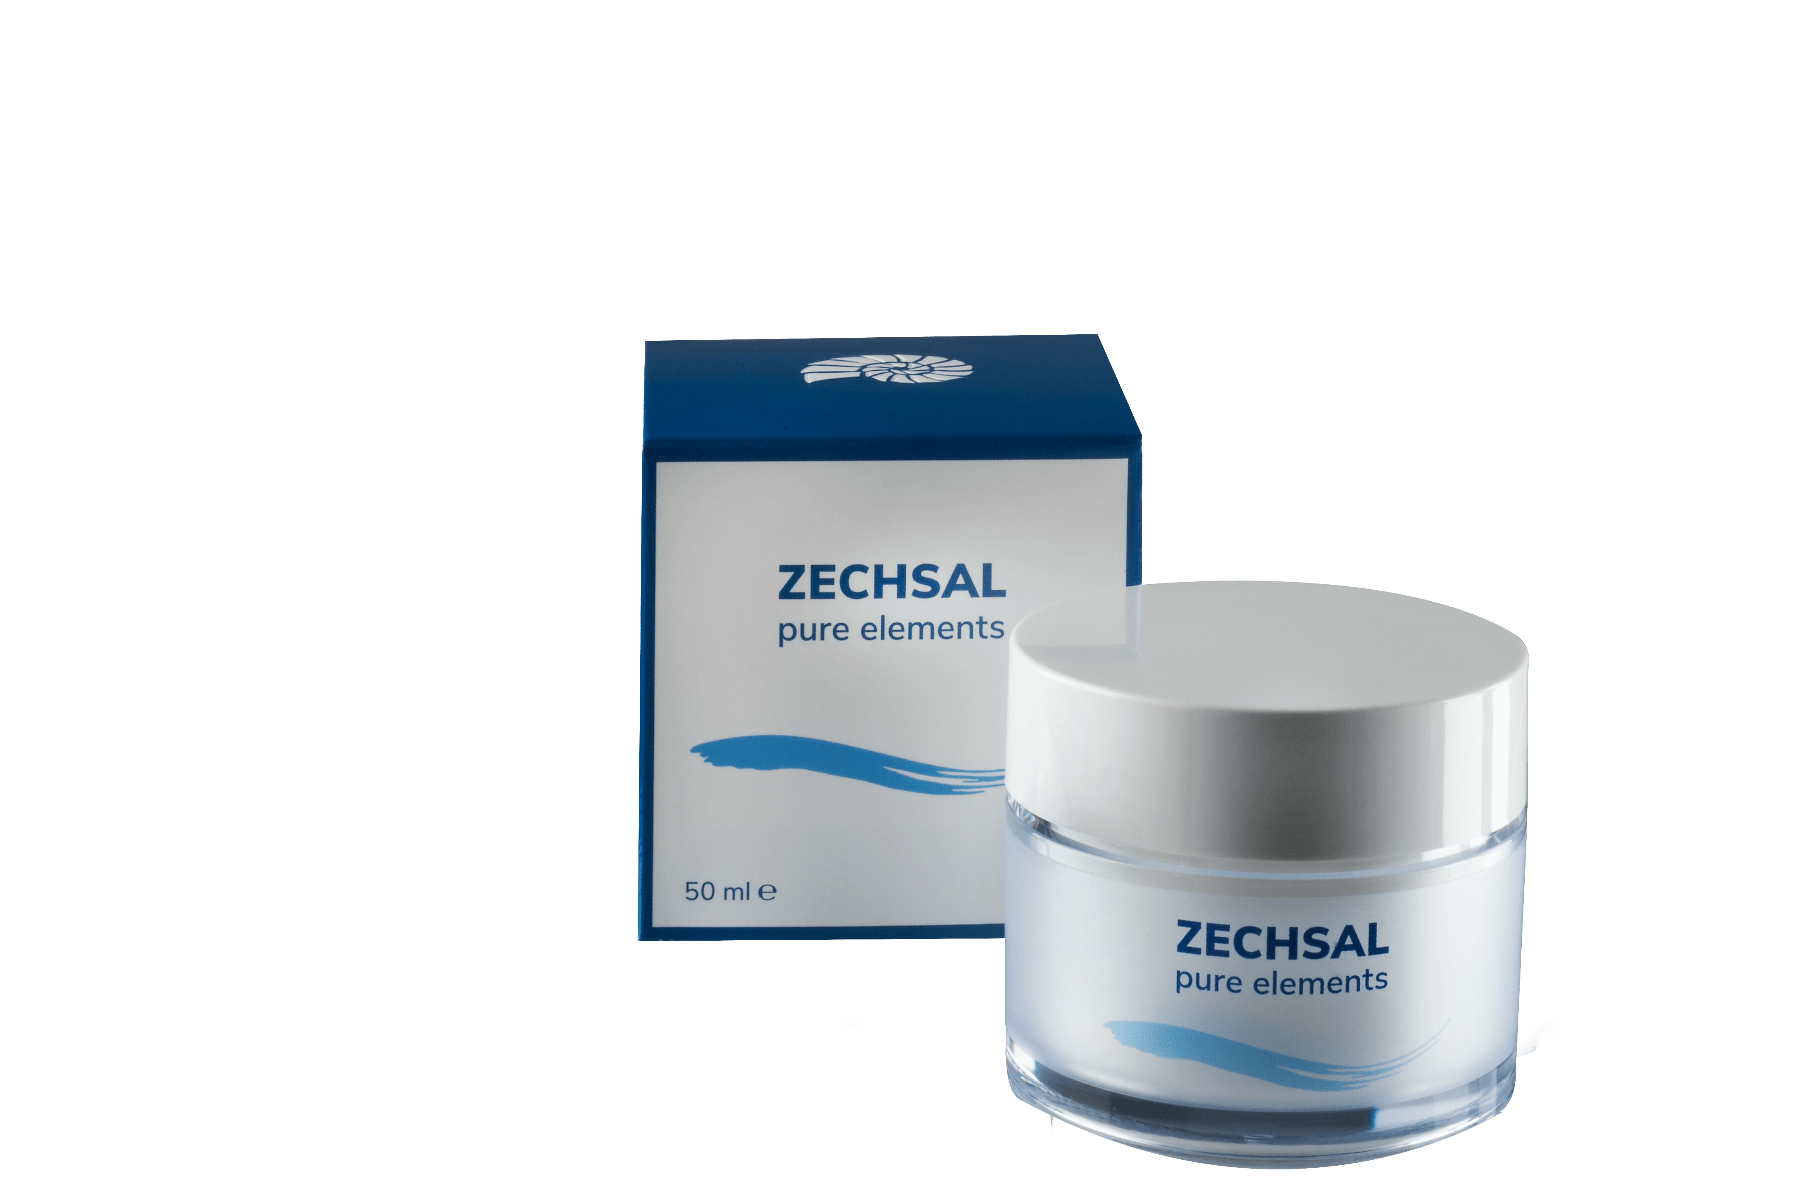 Zechsal Body Cream